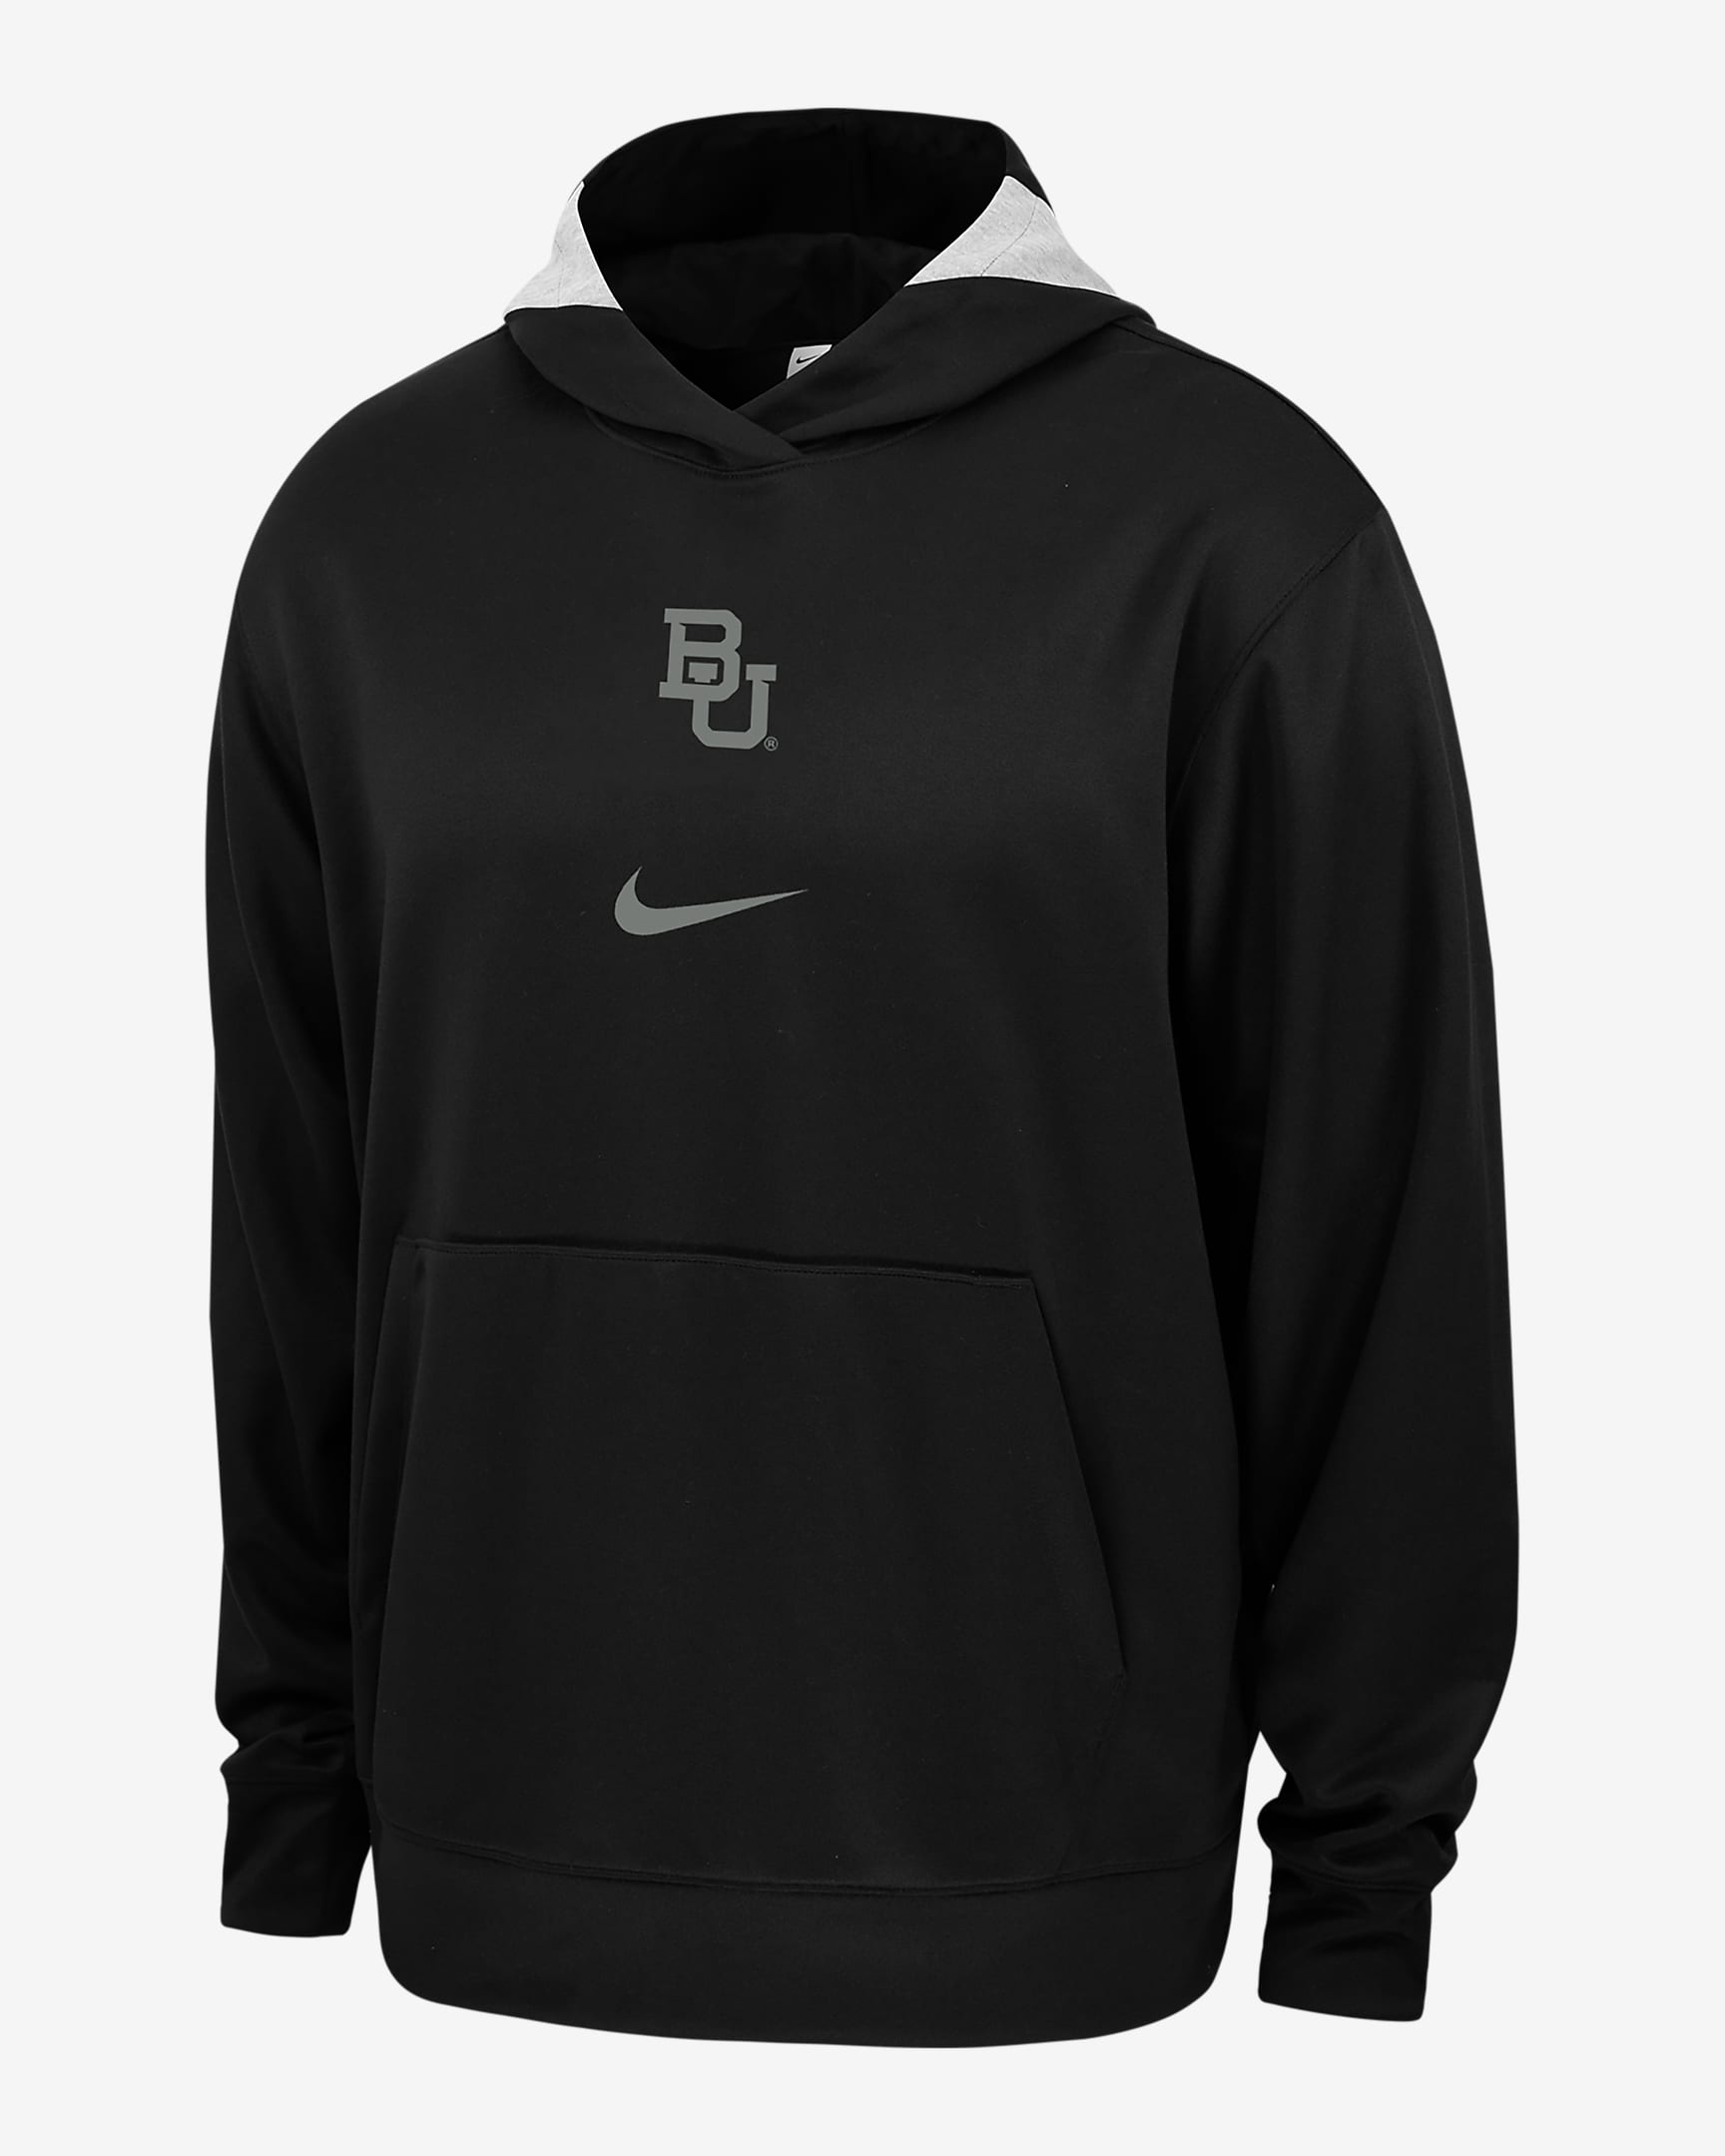 Baylor Spotlight Men's Nike College Hoodie. Nike.com